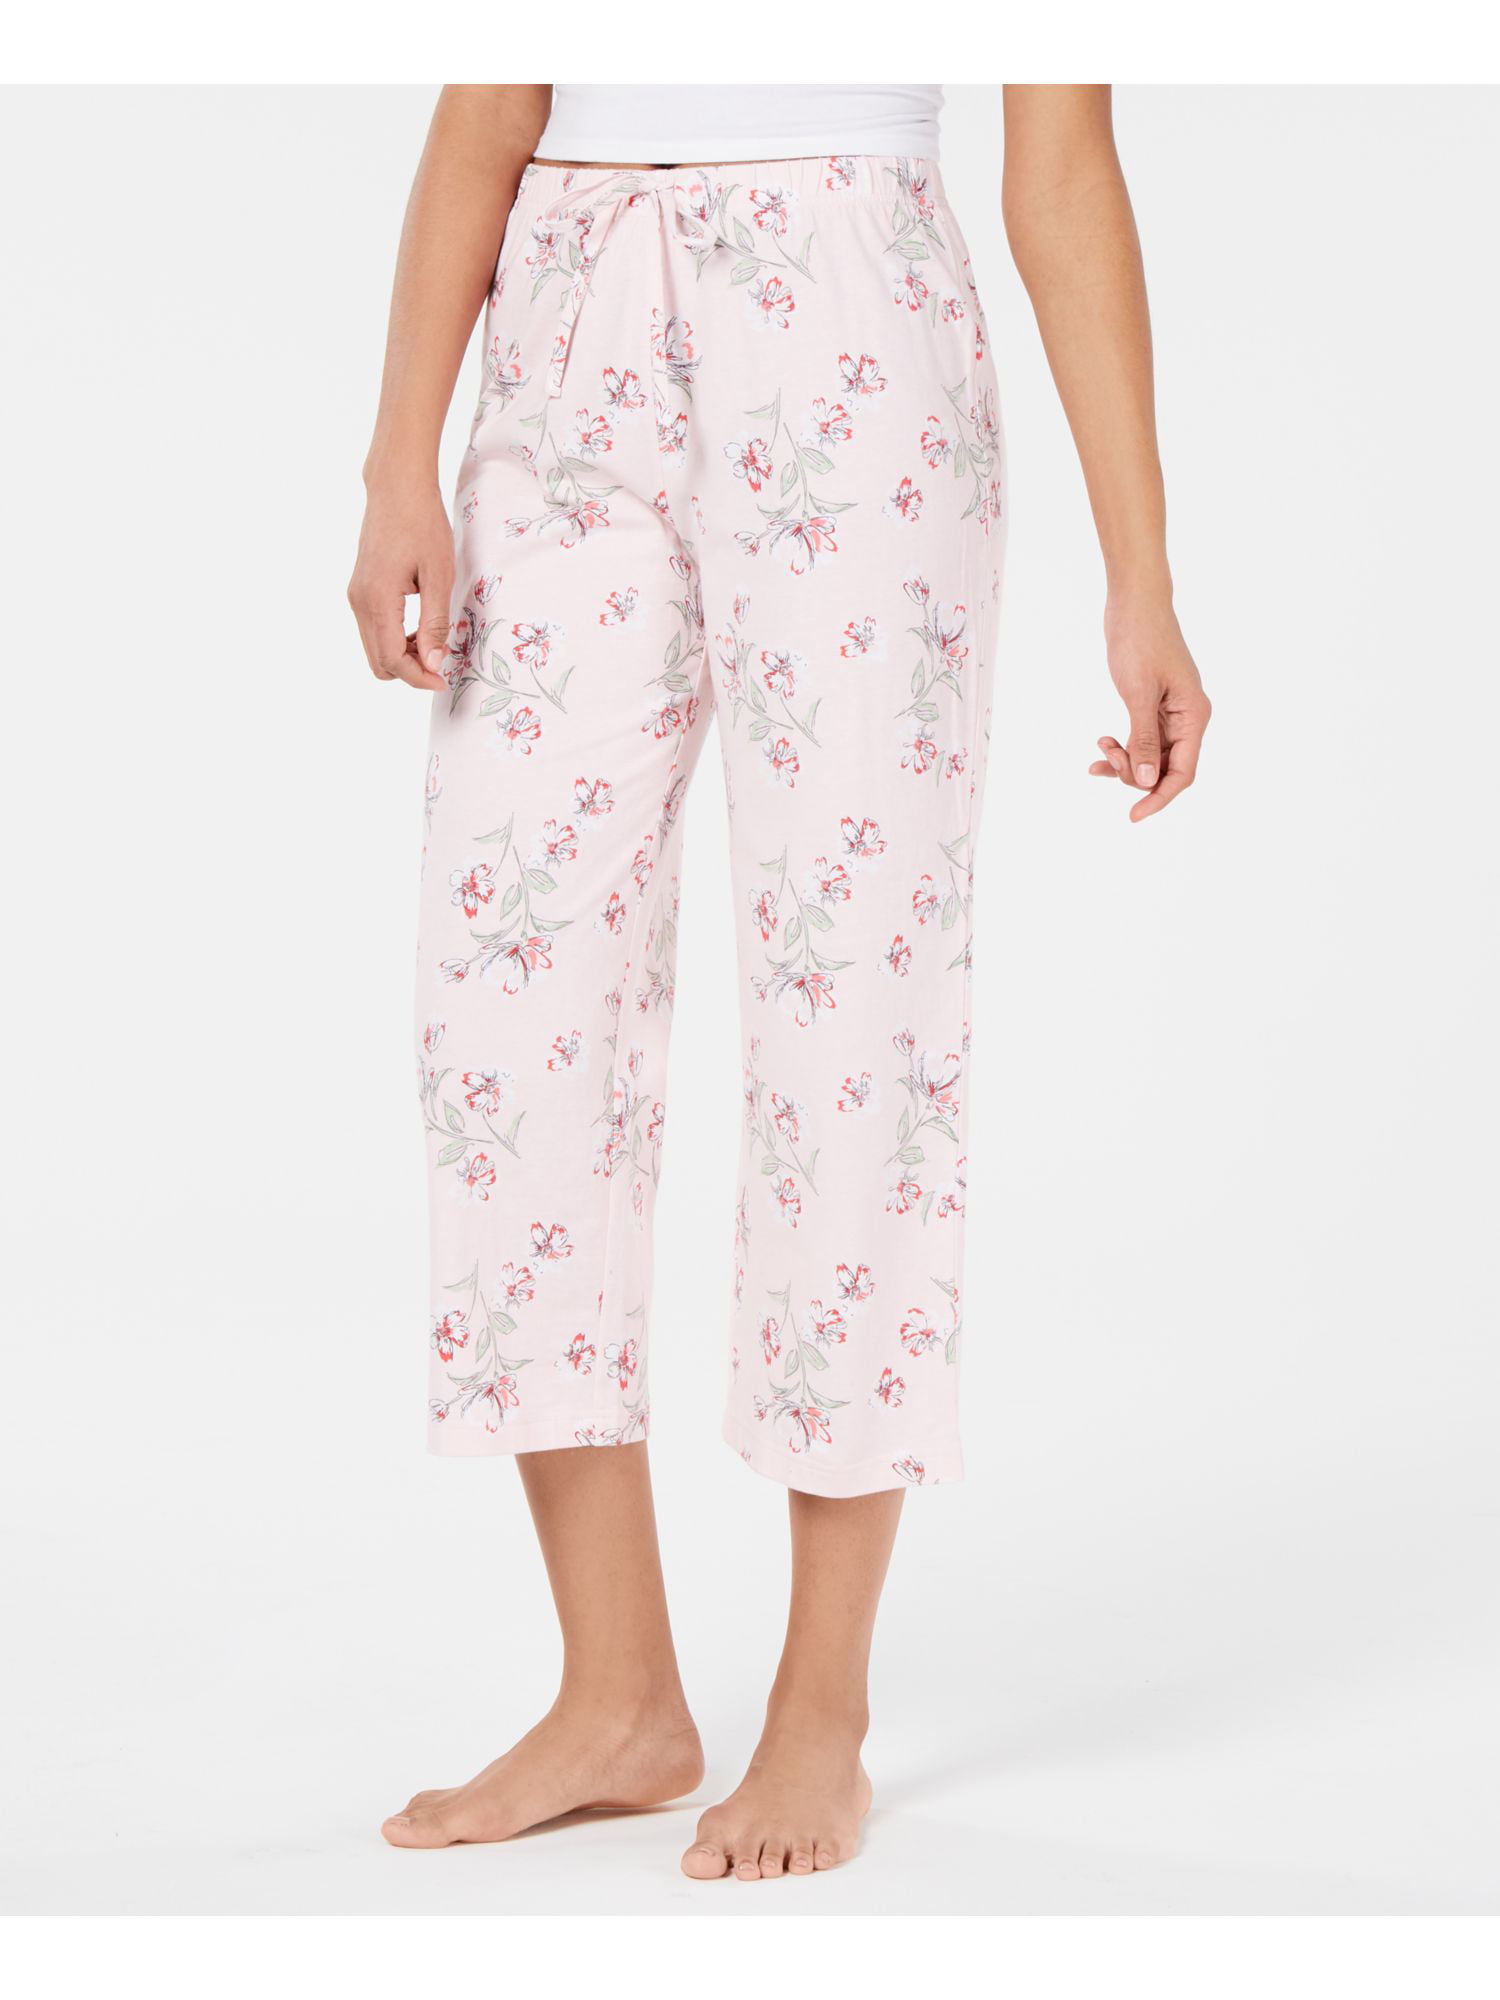 CHARTER CLUB Intimates Pink Floral Sleepwear Pants Size: XXL 